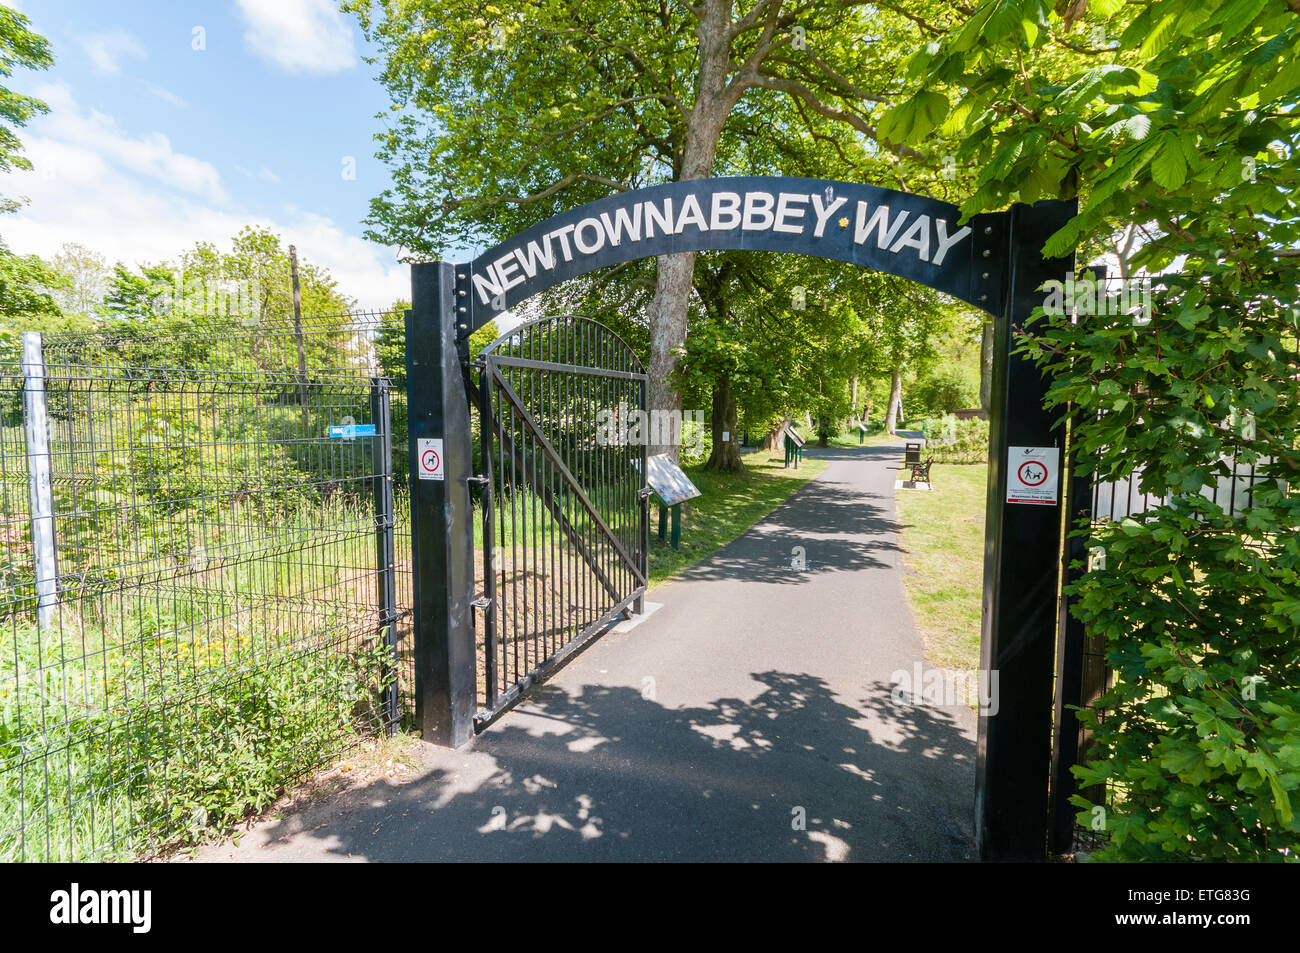 Newtownabbey Way walking route in County Antrim, Northern Ireland Stock Photo